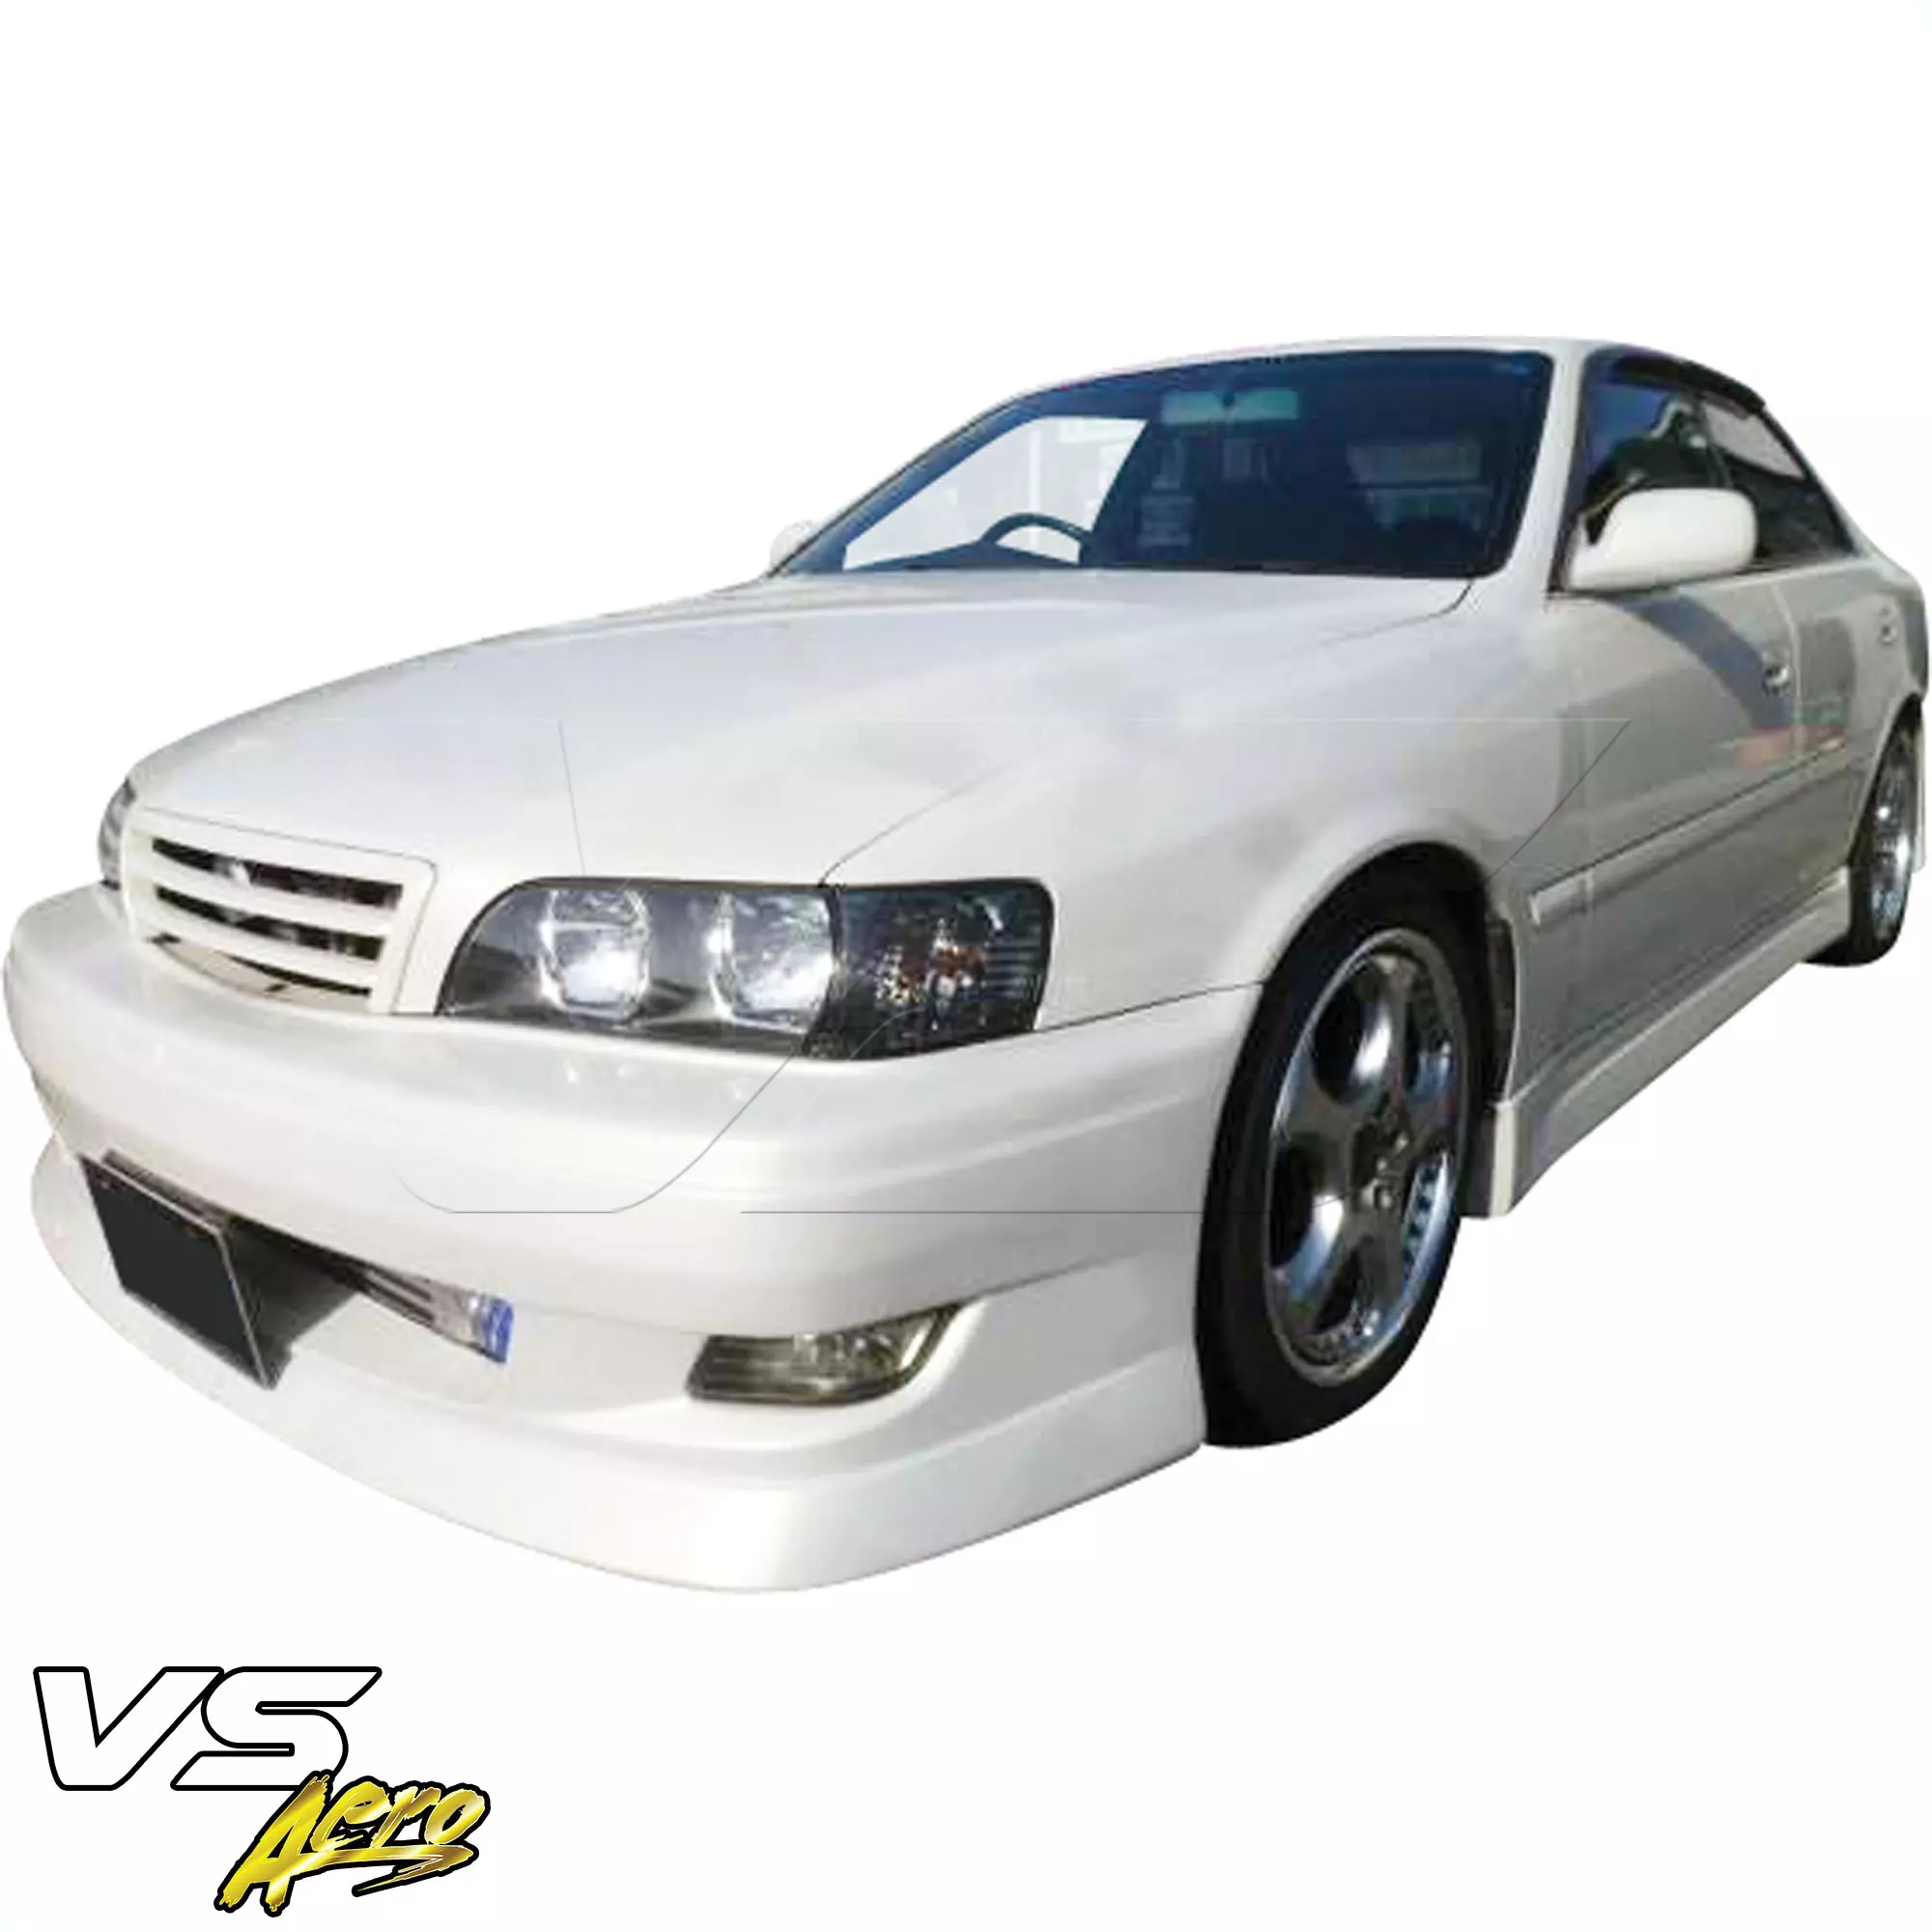 VSaero FRP URA vL Body Kit 4pc > Toyota Chaser JZX100 1996-2000 - Image 14